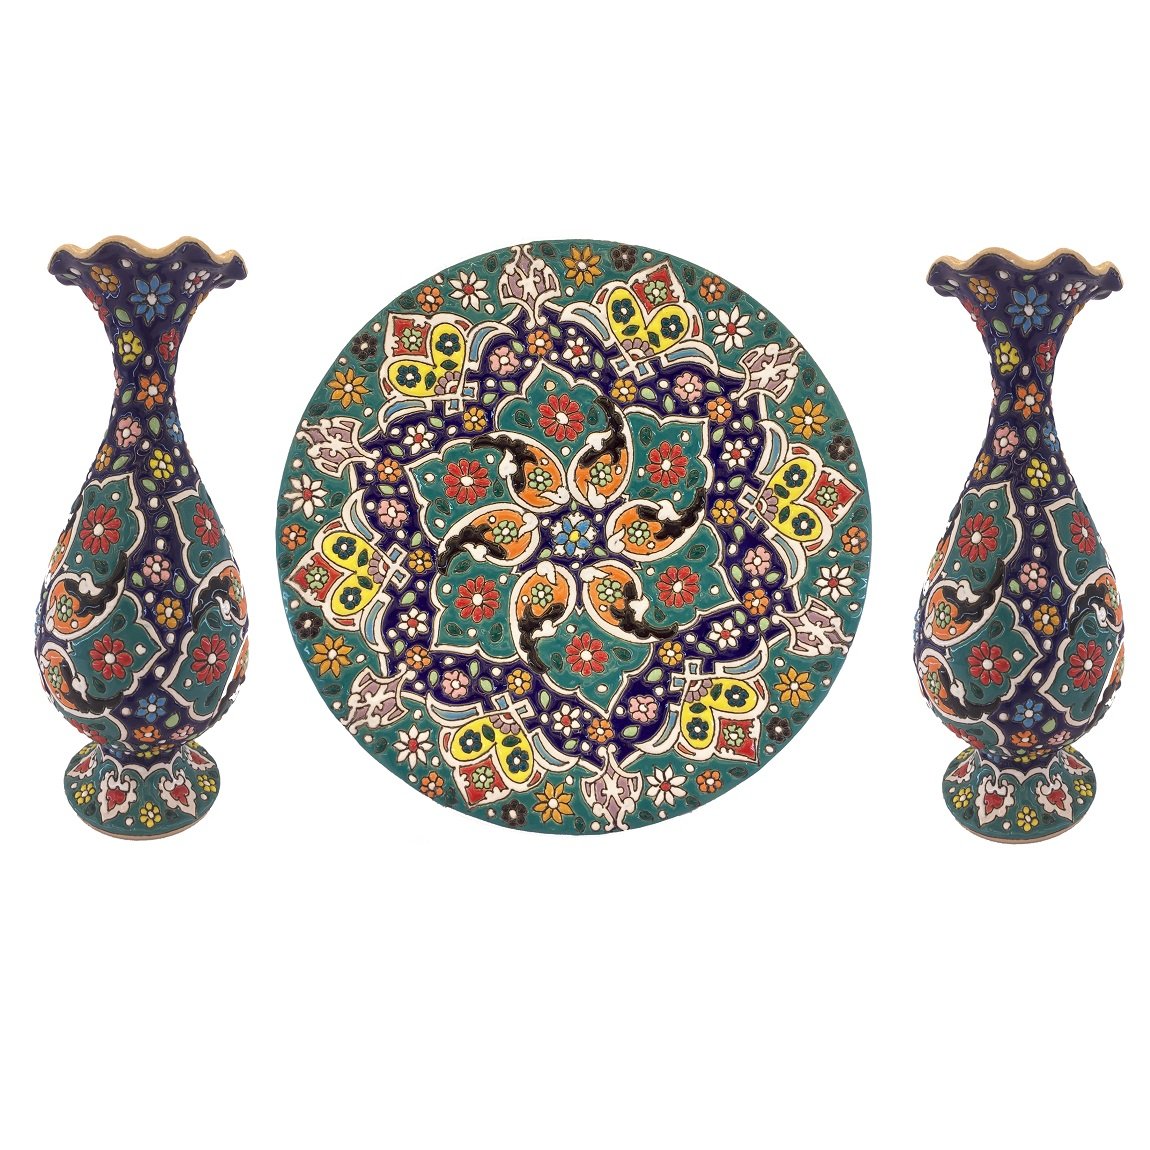 Enamel Handicraft pottery dish and pot code zmn21050,handicraft pots,handicrafts plates,hand plate,but handicrafts